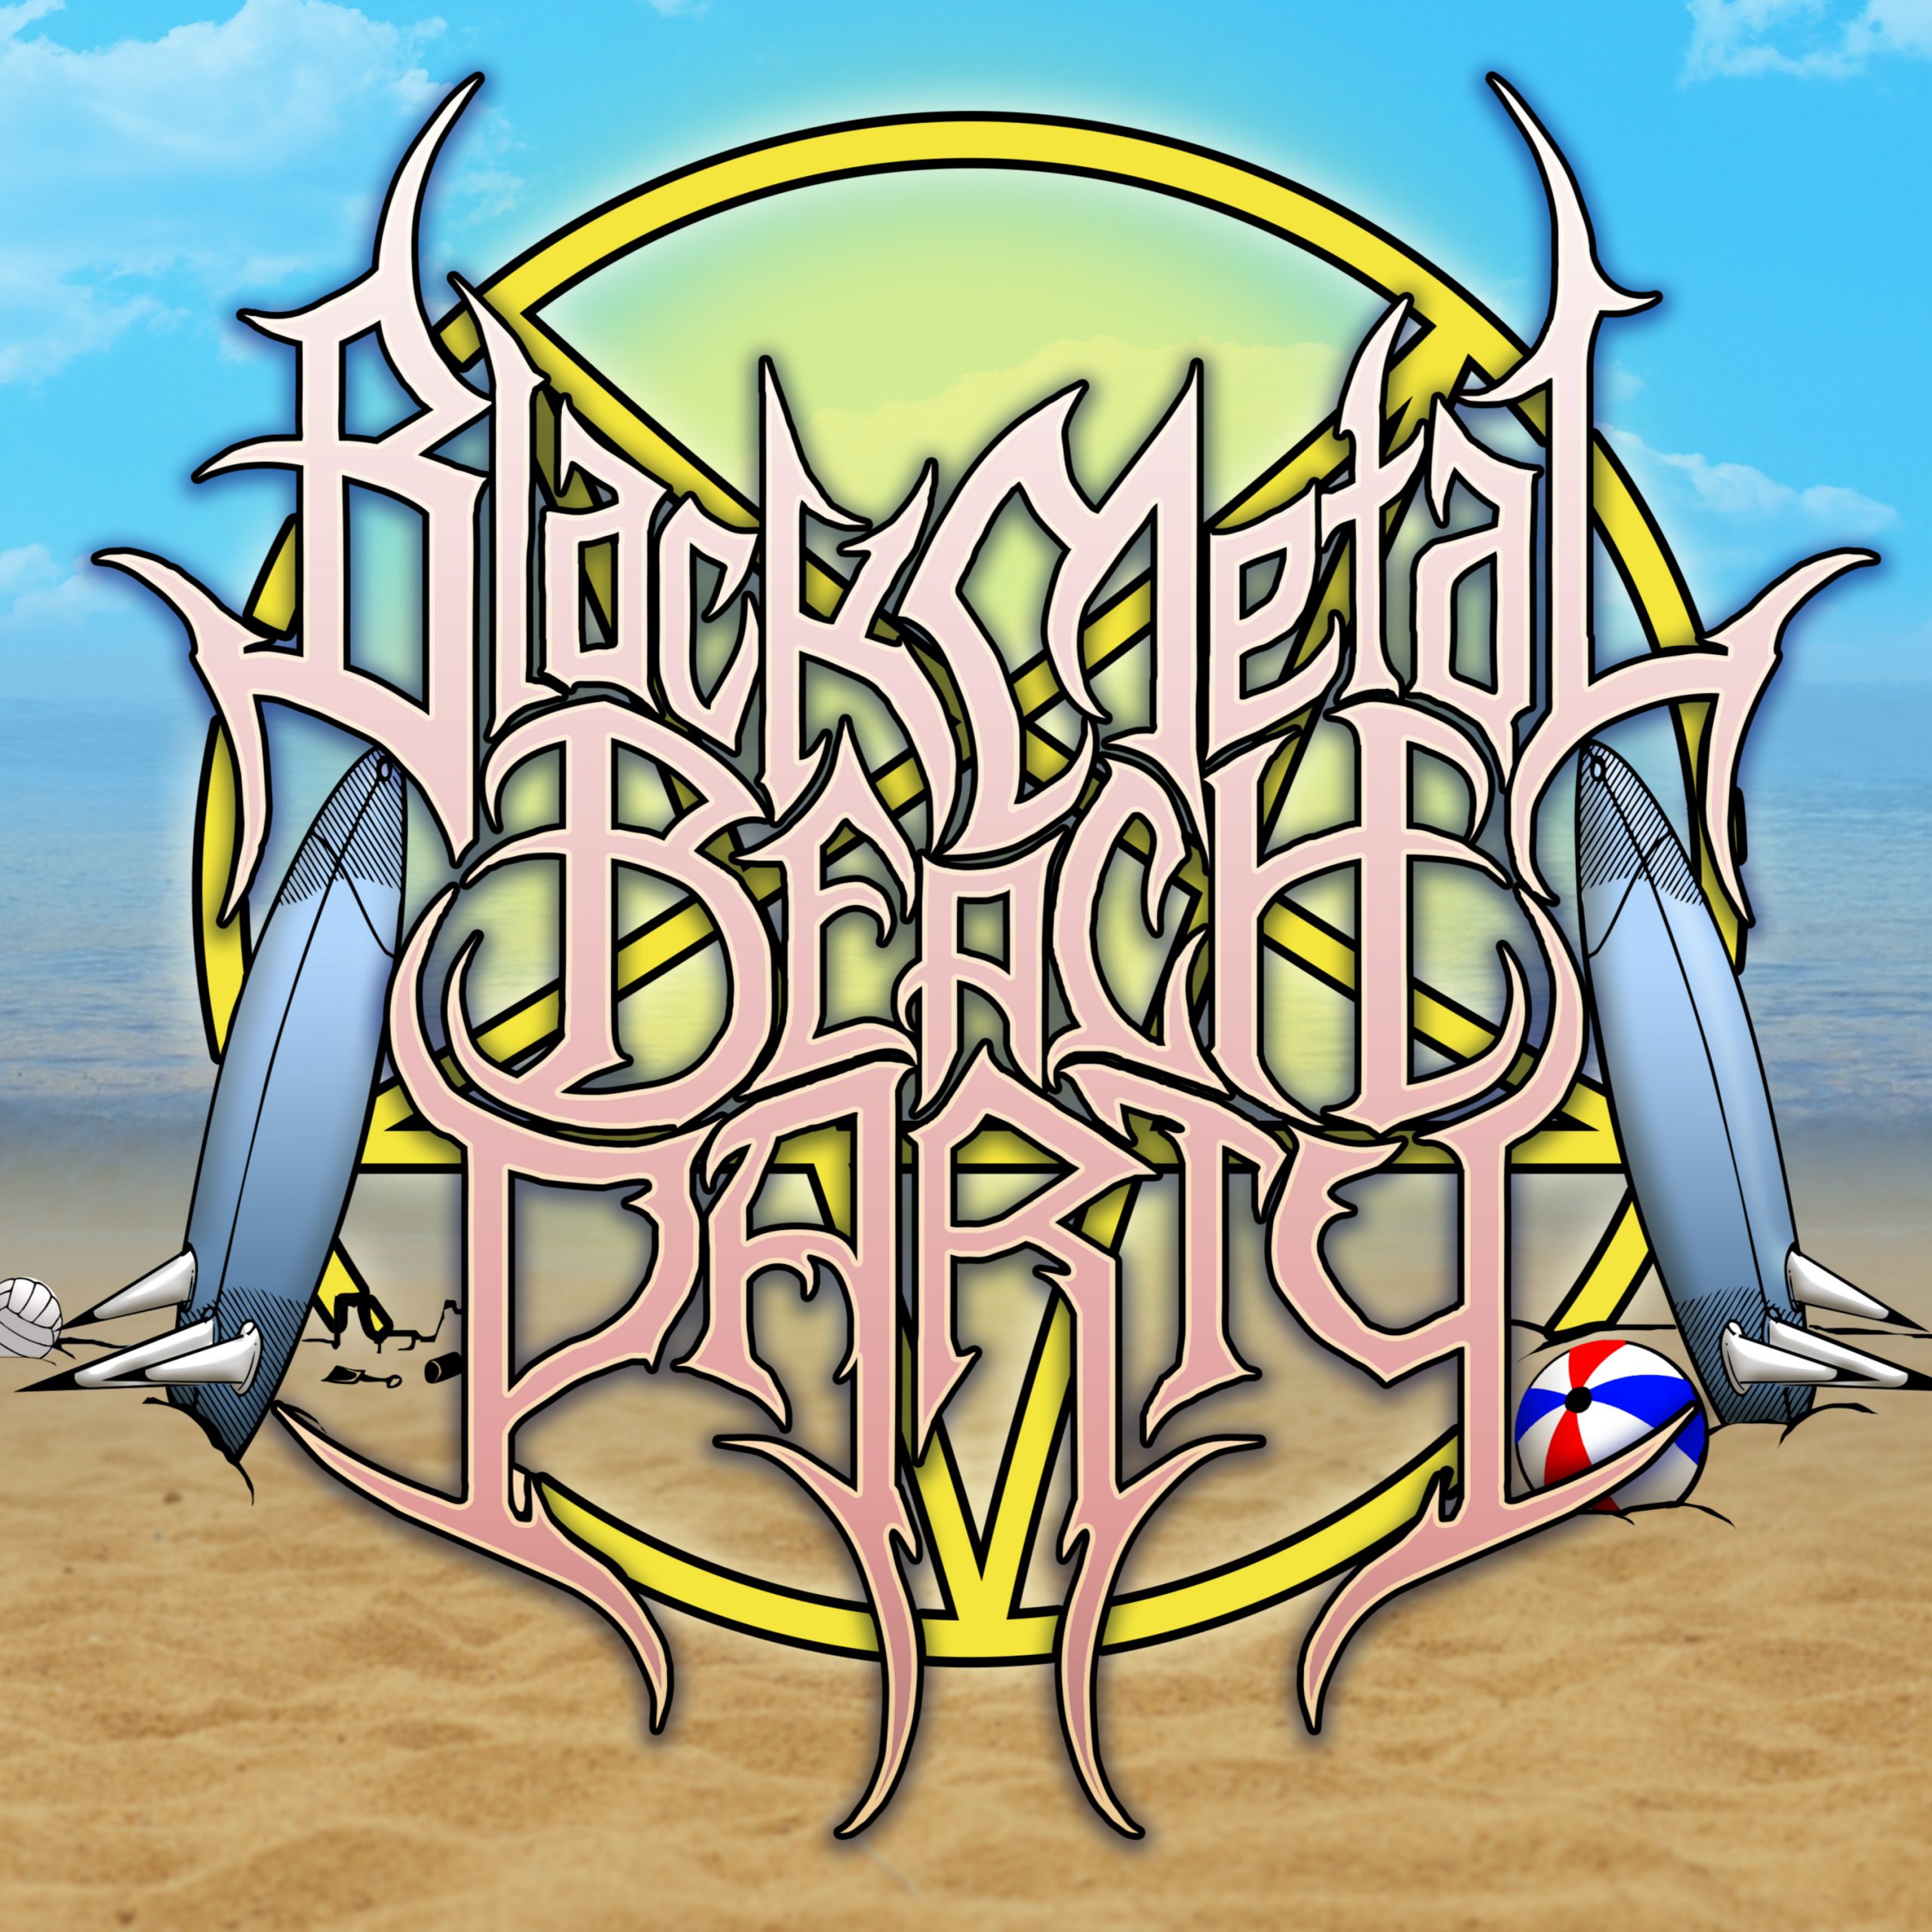 PCTD Episode 103: BLACK METAL BEACH PARTY